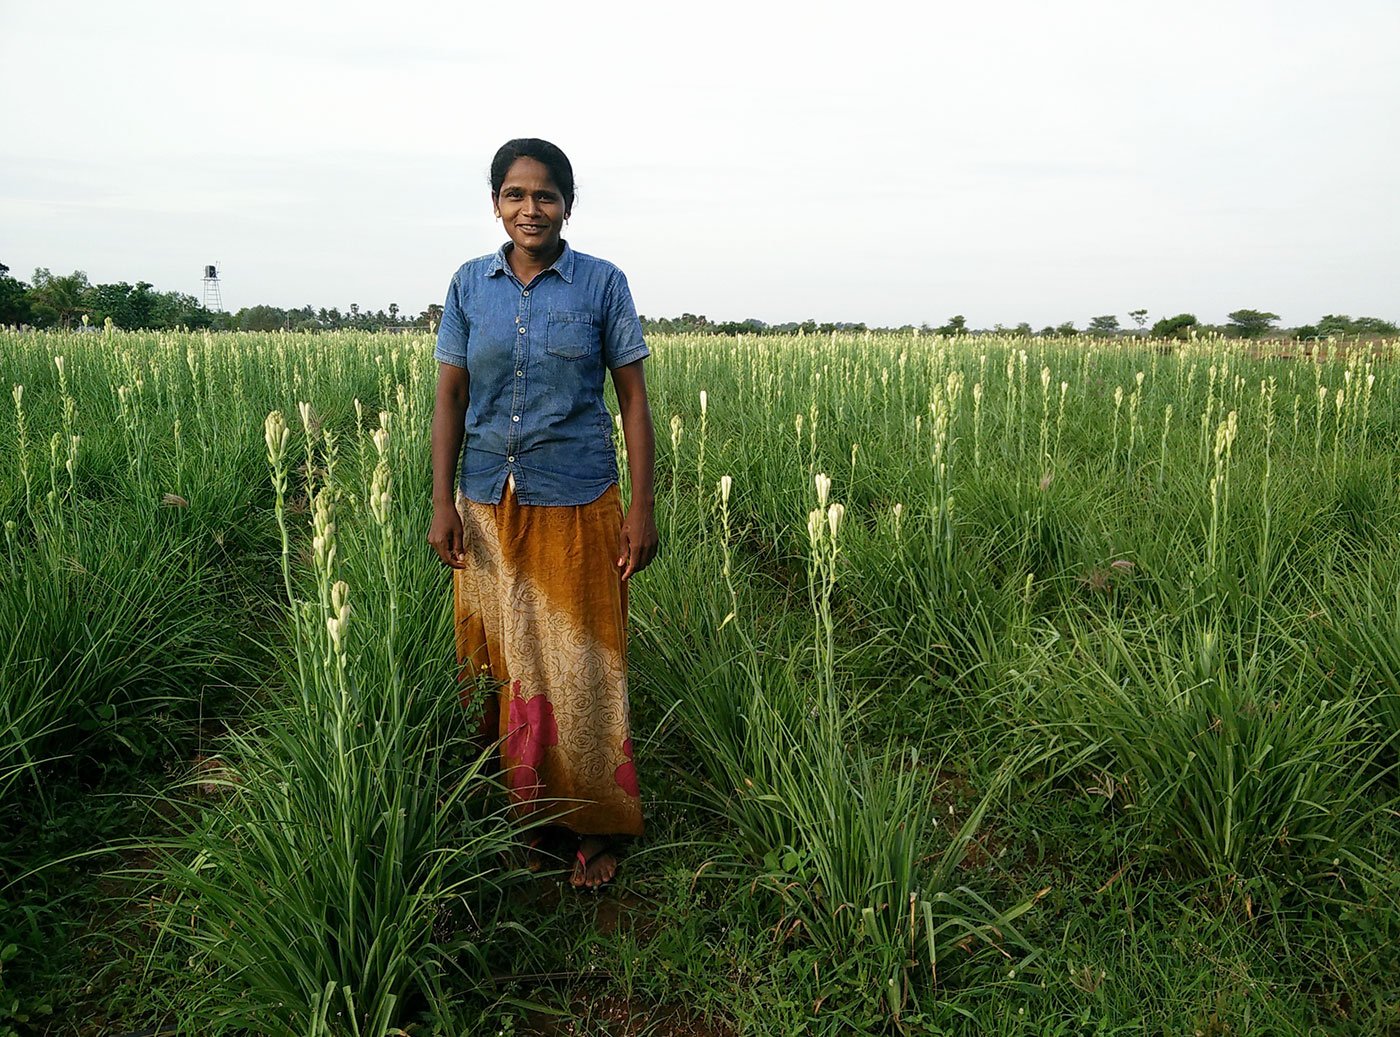 Chandra in her field of tuberose flowers